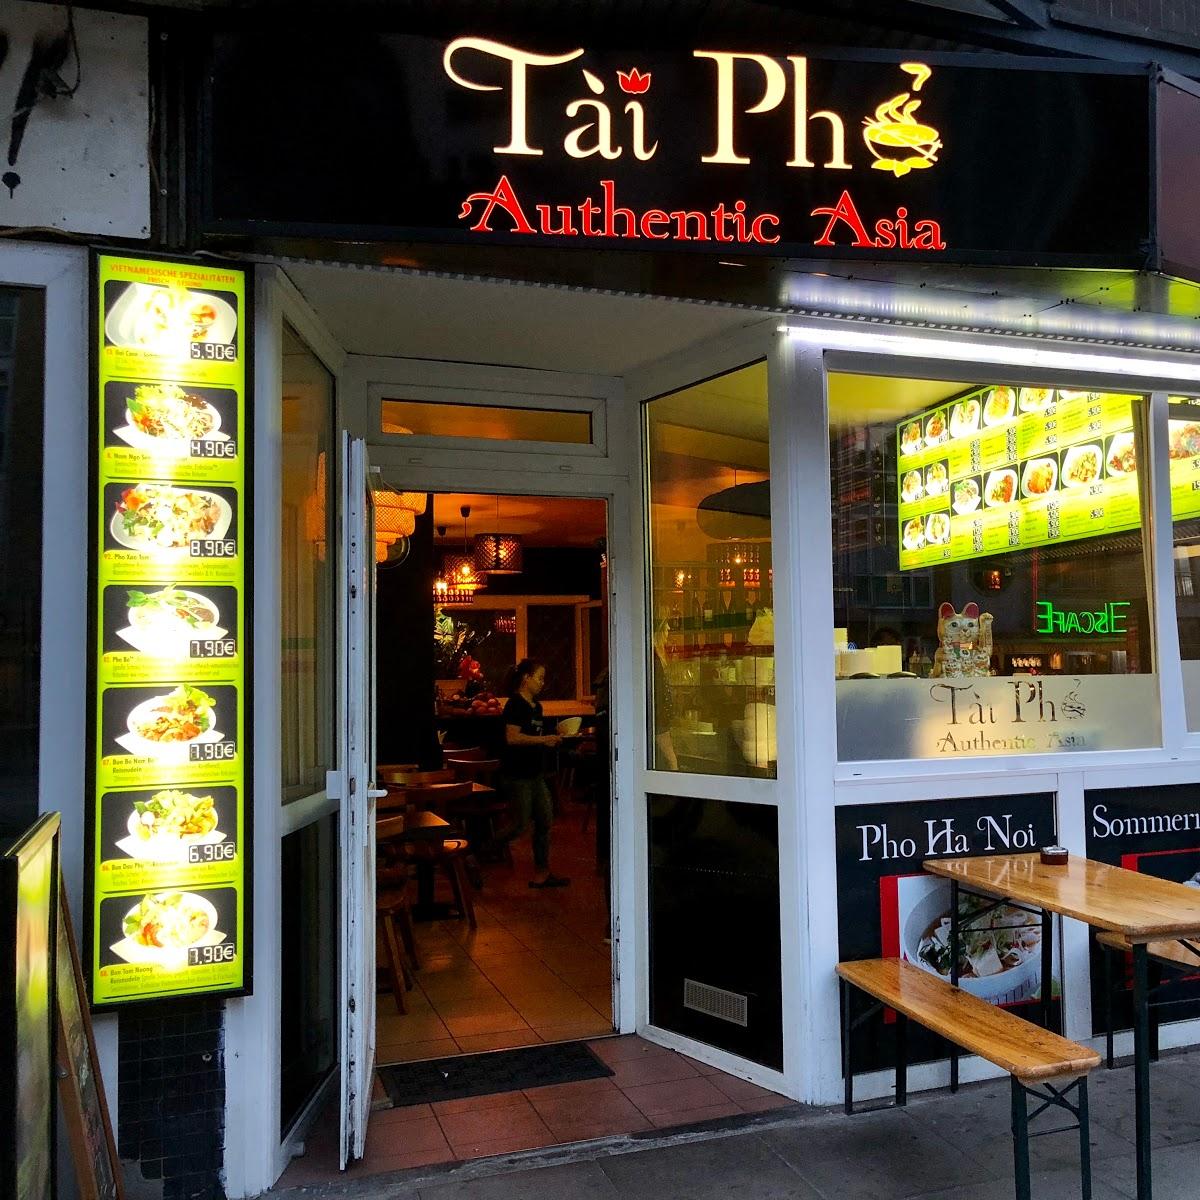 Restaurant "Tai Pho" in Hamburg